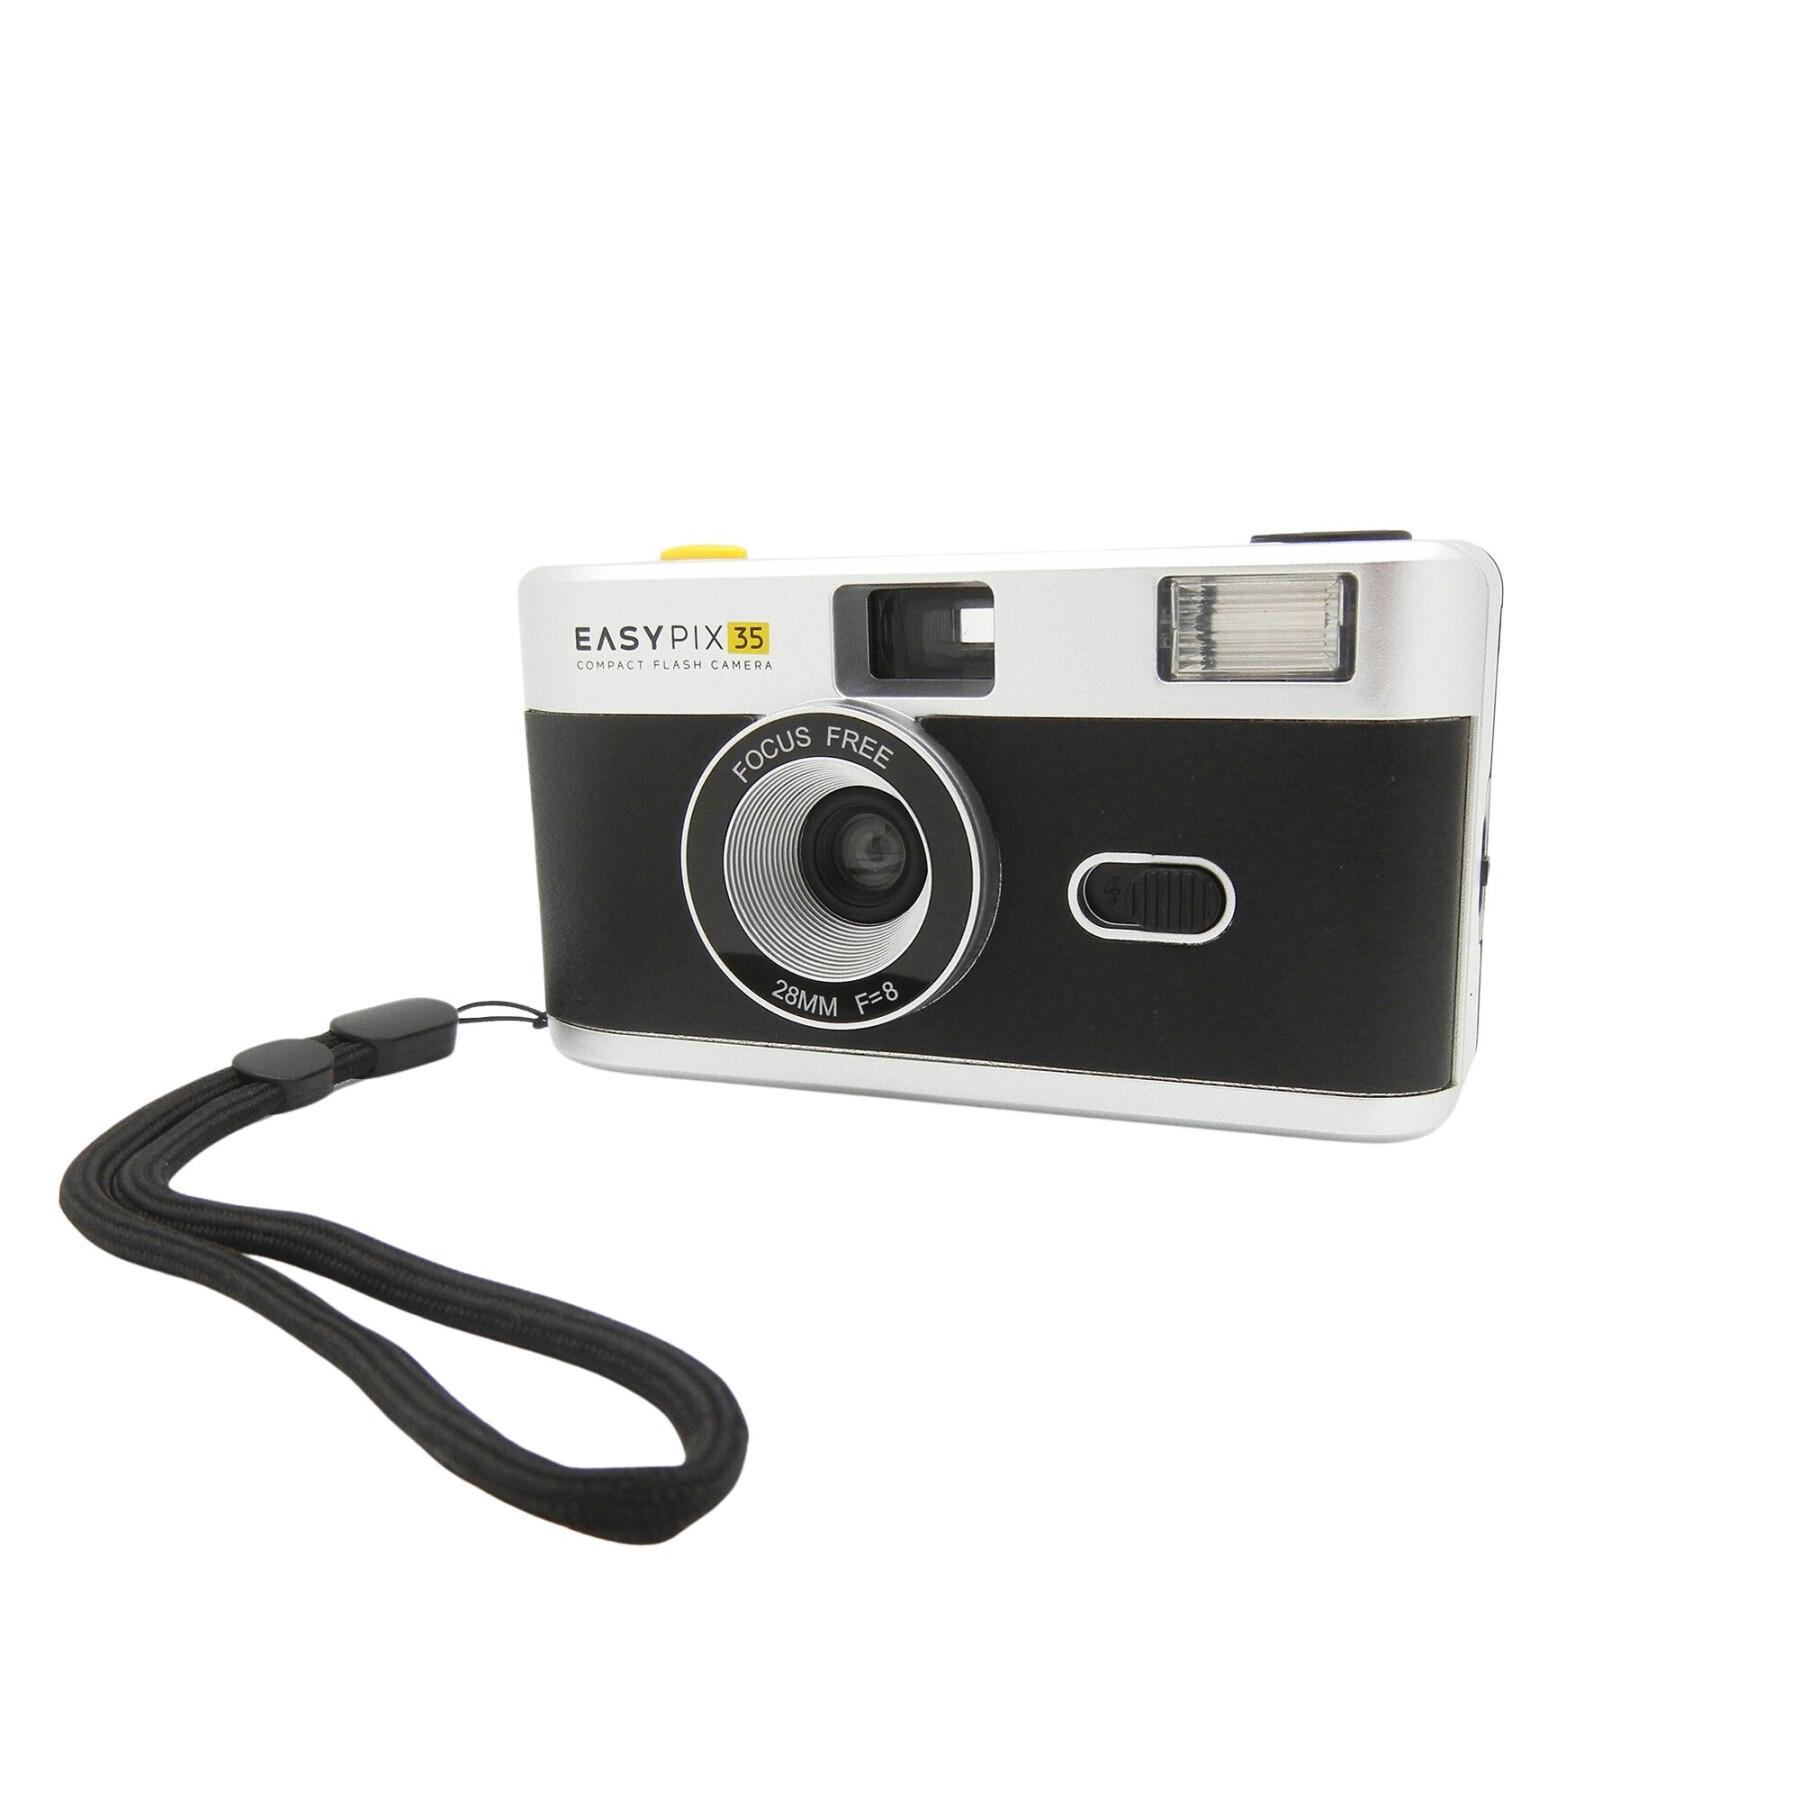 Analoge camera Easypix 35 Analogue reuseable 35mm